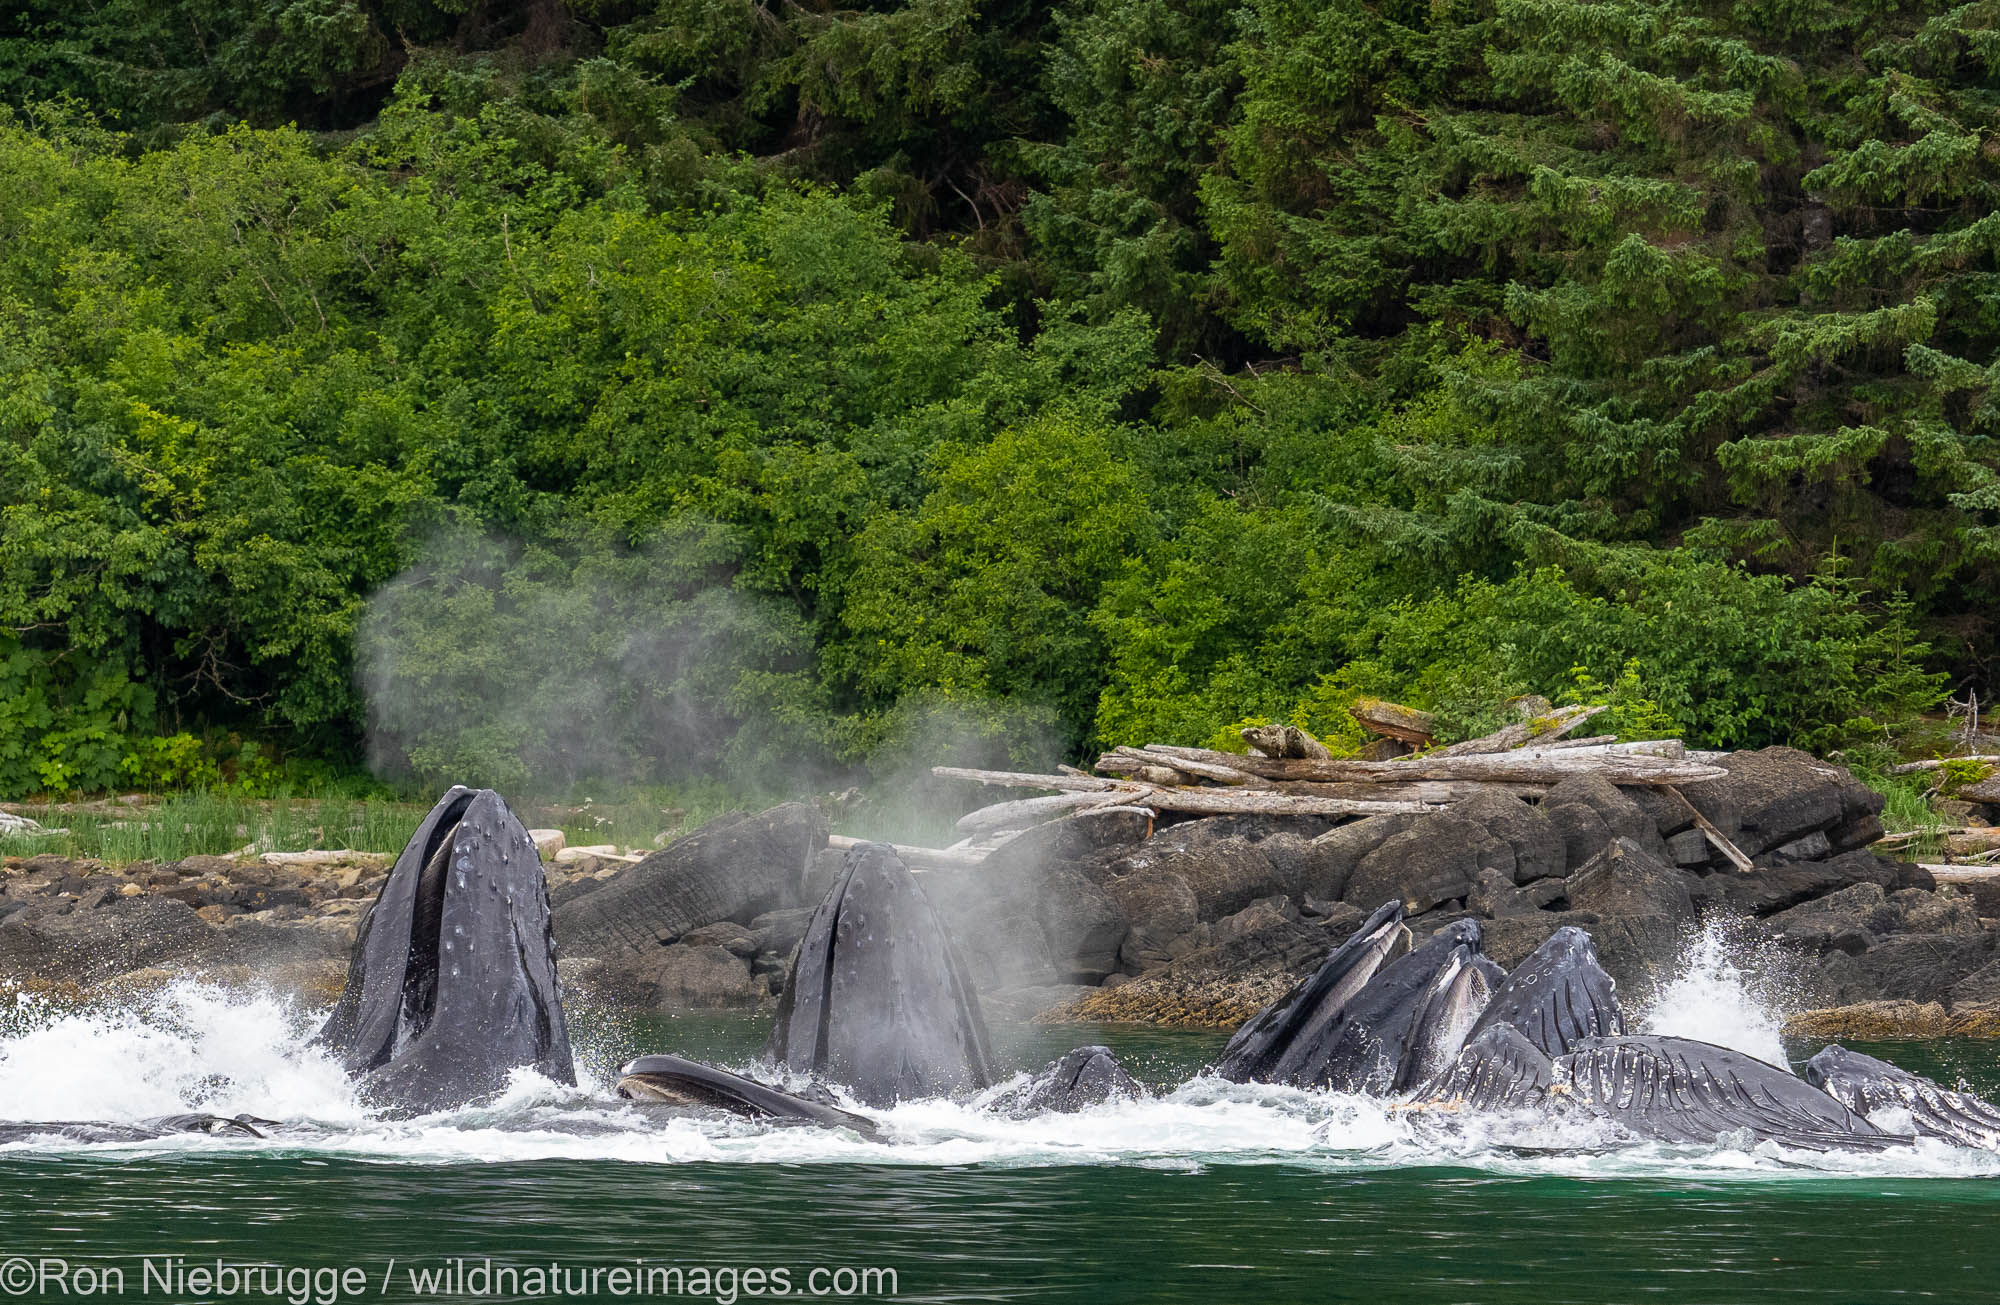 Humpback whales bubble-net feeding, Tongass National Forest, Alaska.